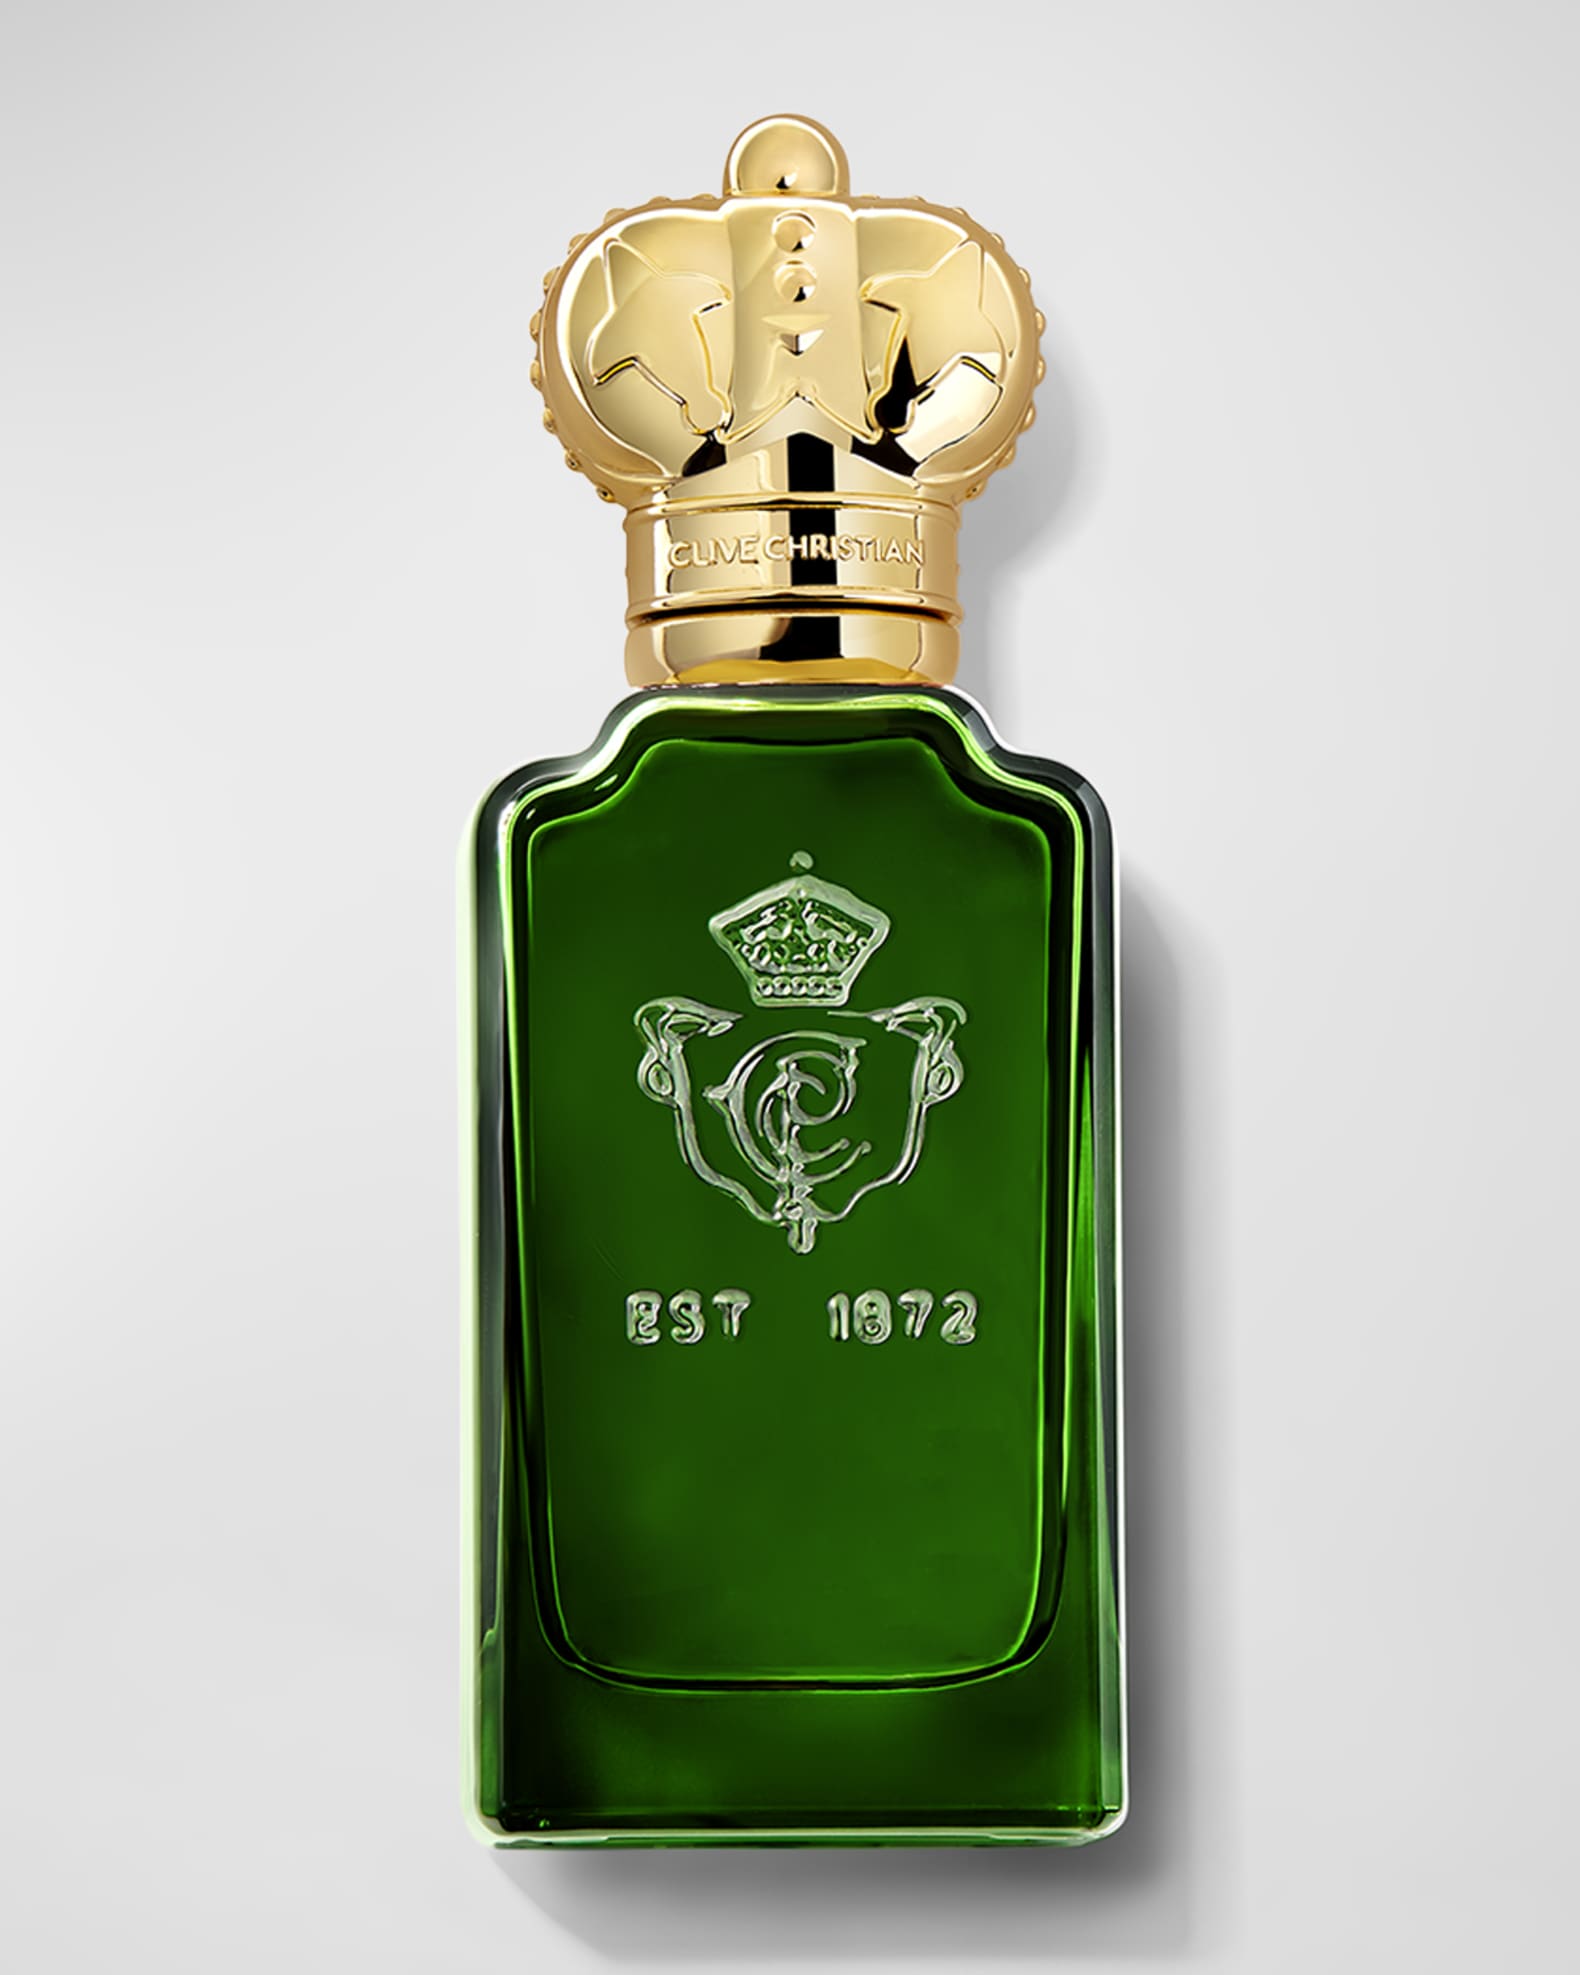 Clive Christian Original Collection 1872 Feminine  perfume